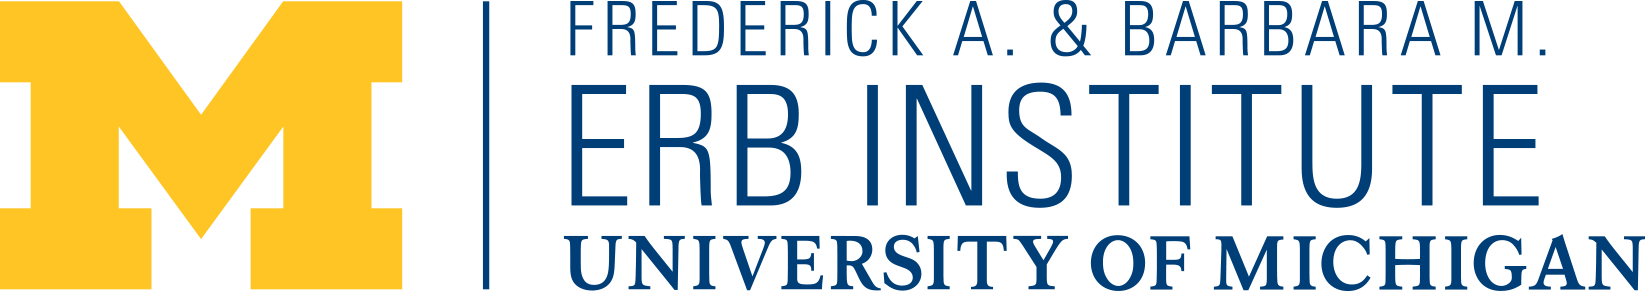 Erb+logo